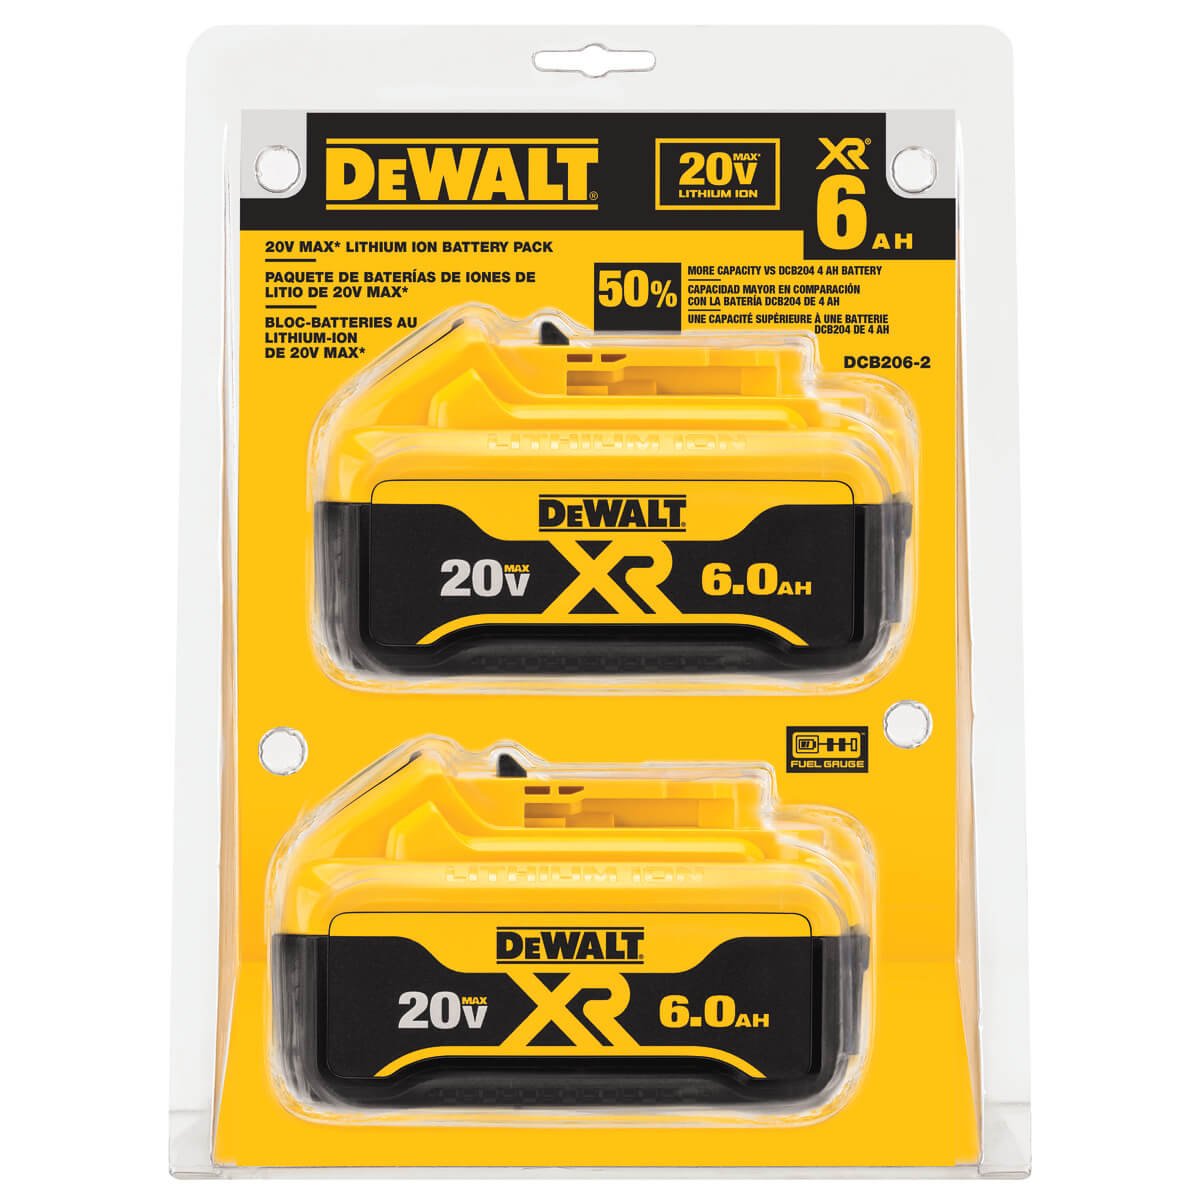 DEWALT DCB206-2 20V MAX 6.0Ah Lithium Ion Premium Battery, 2 Pack